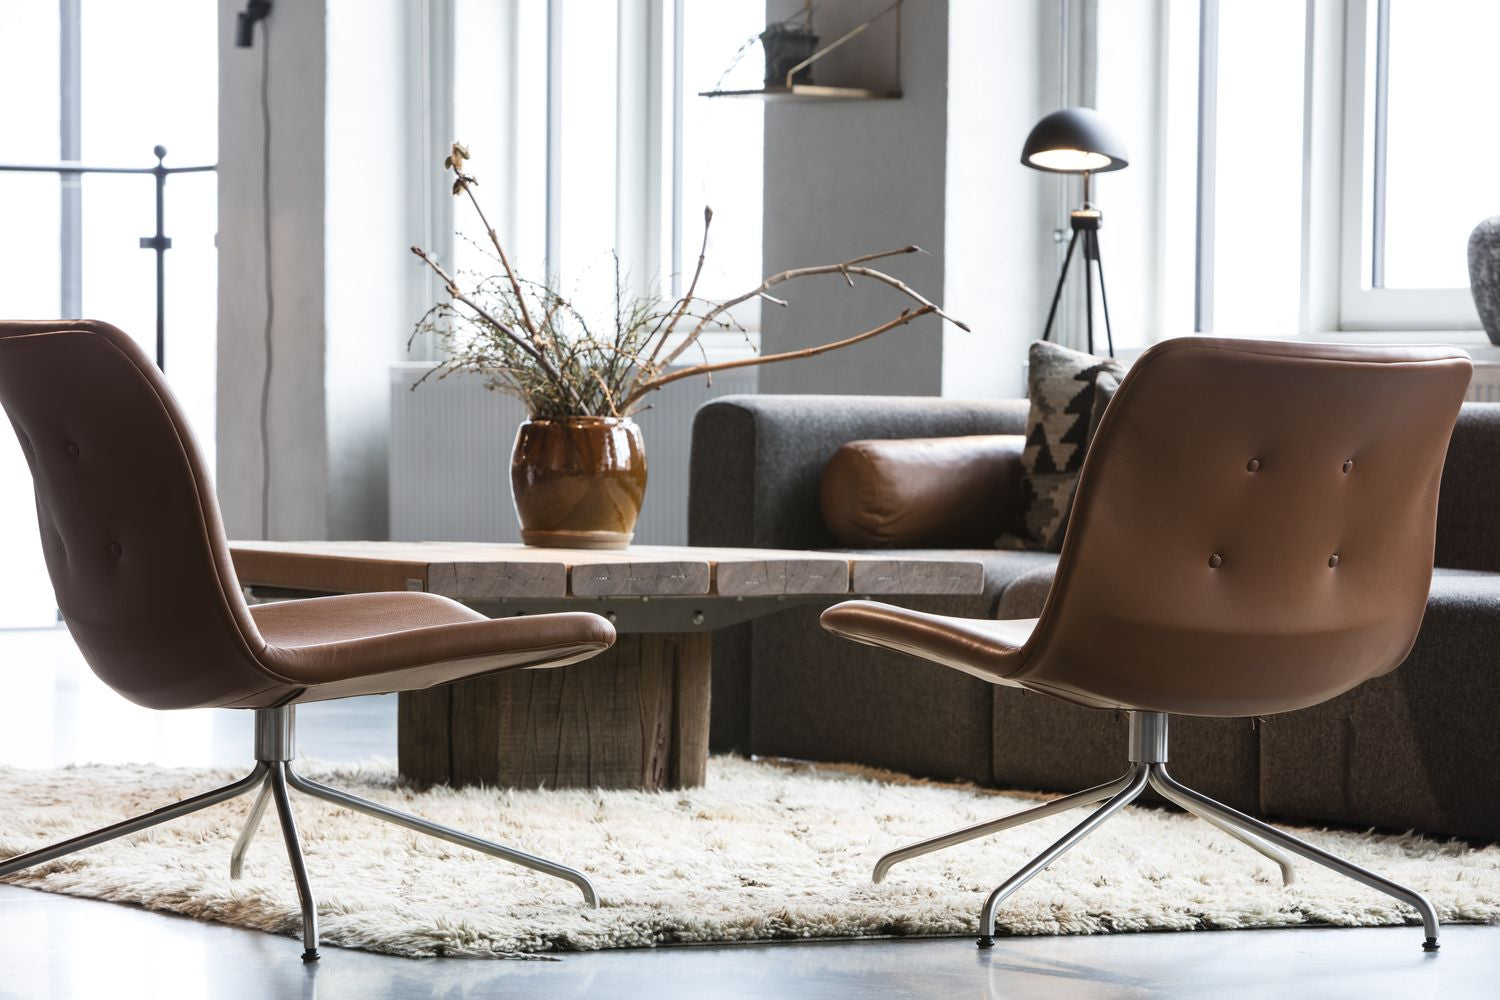 Bent Hansen Primum lounge stol utan armstöd, svart ram/svart zenso läder